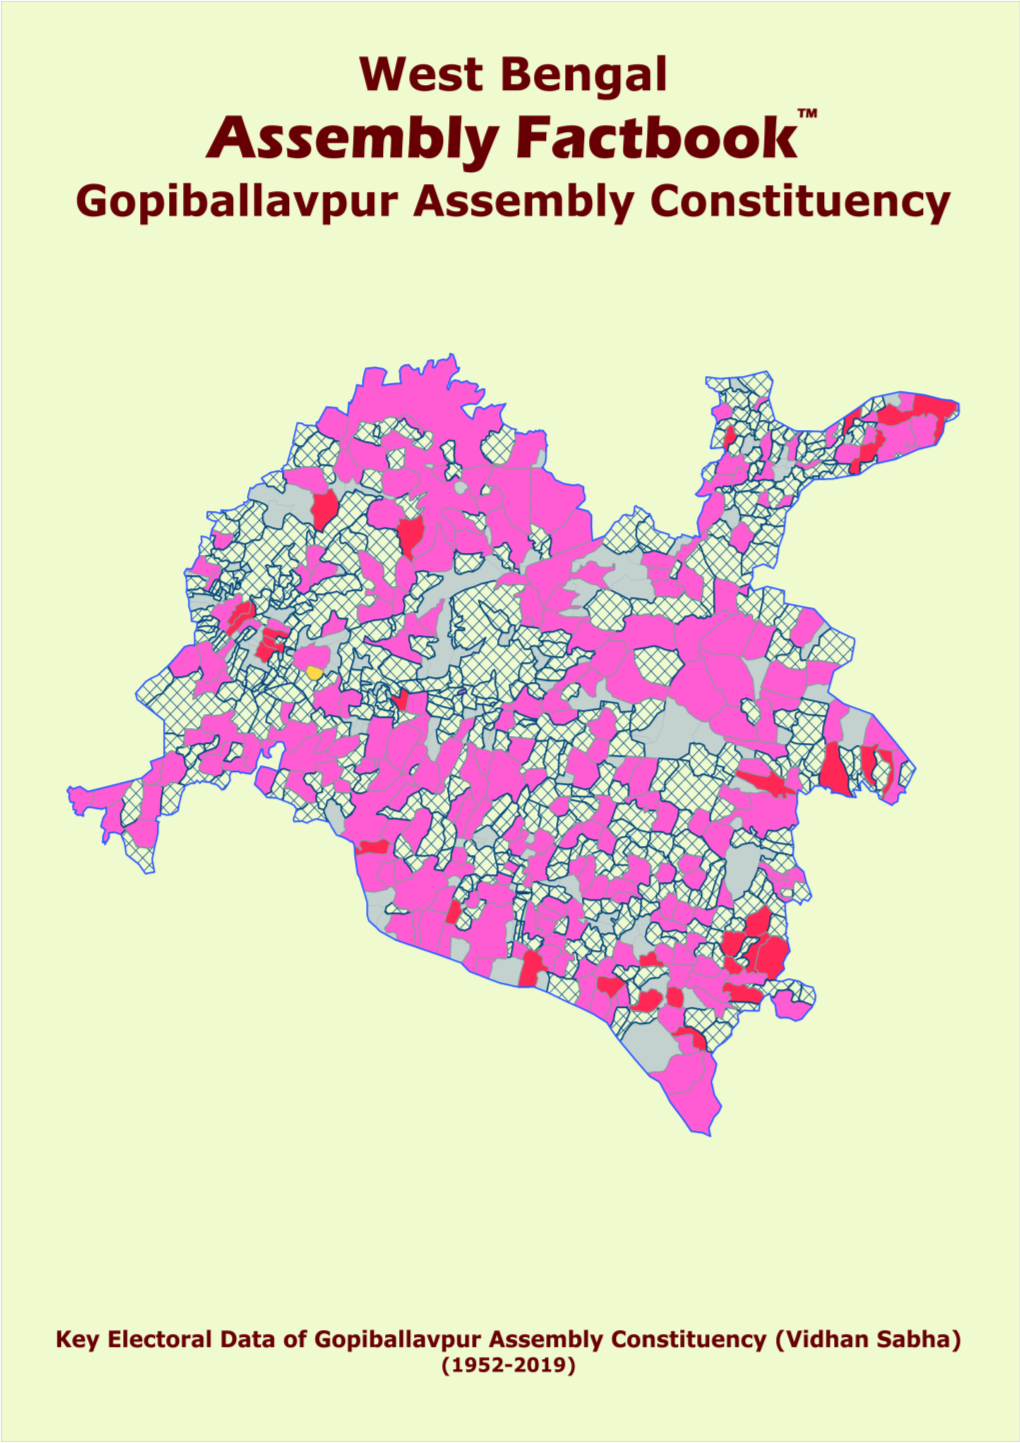 Gopiballavpur Assembly West Bengal Factbook